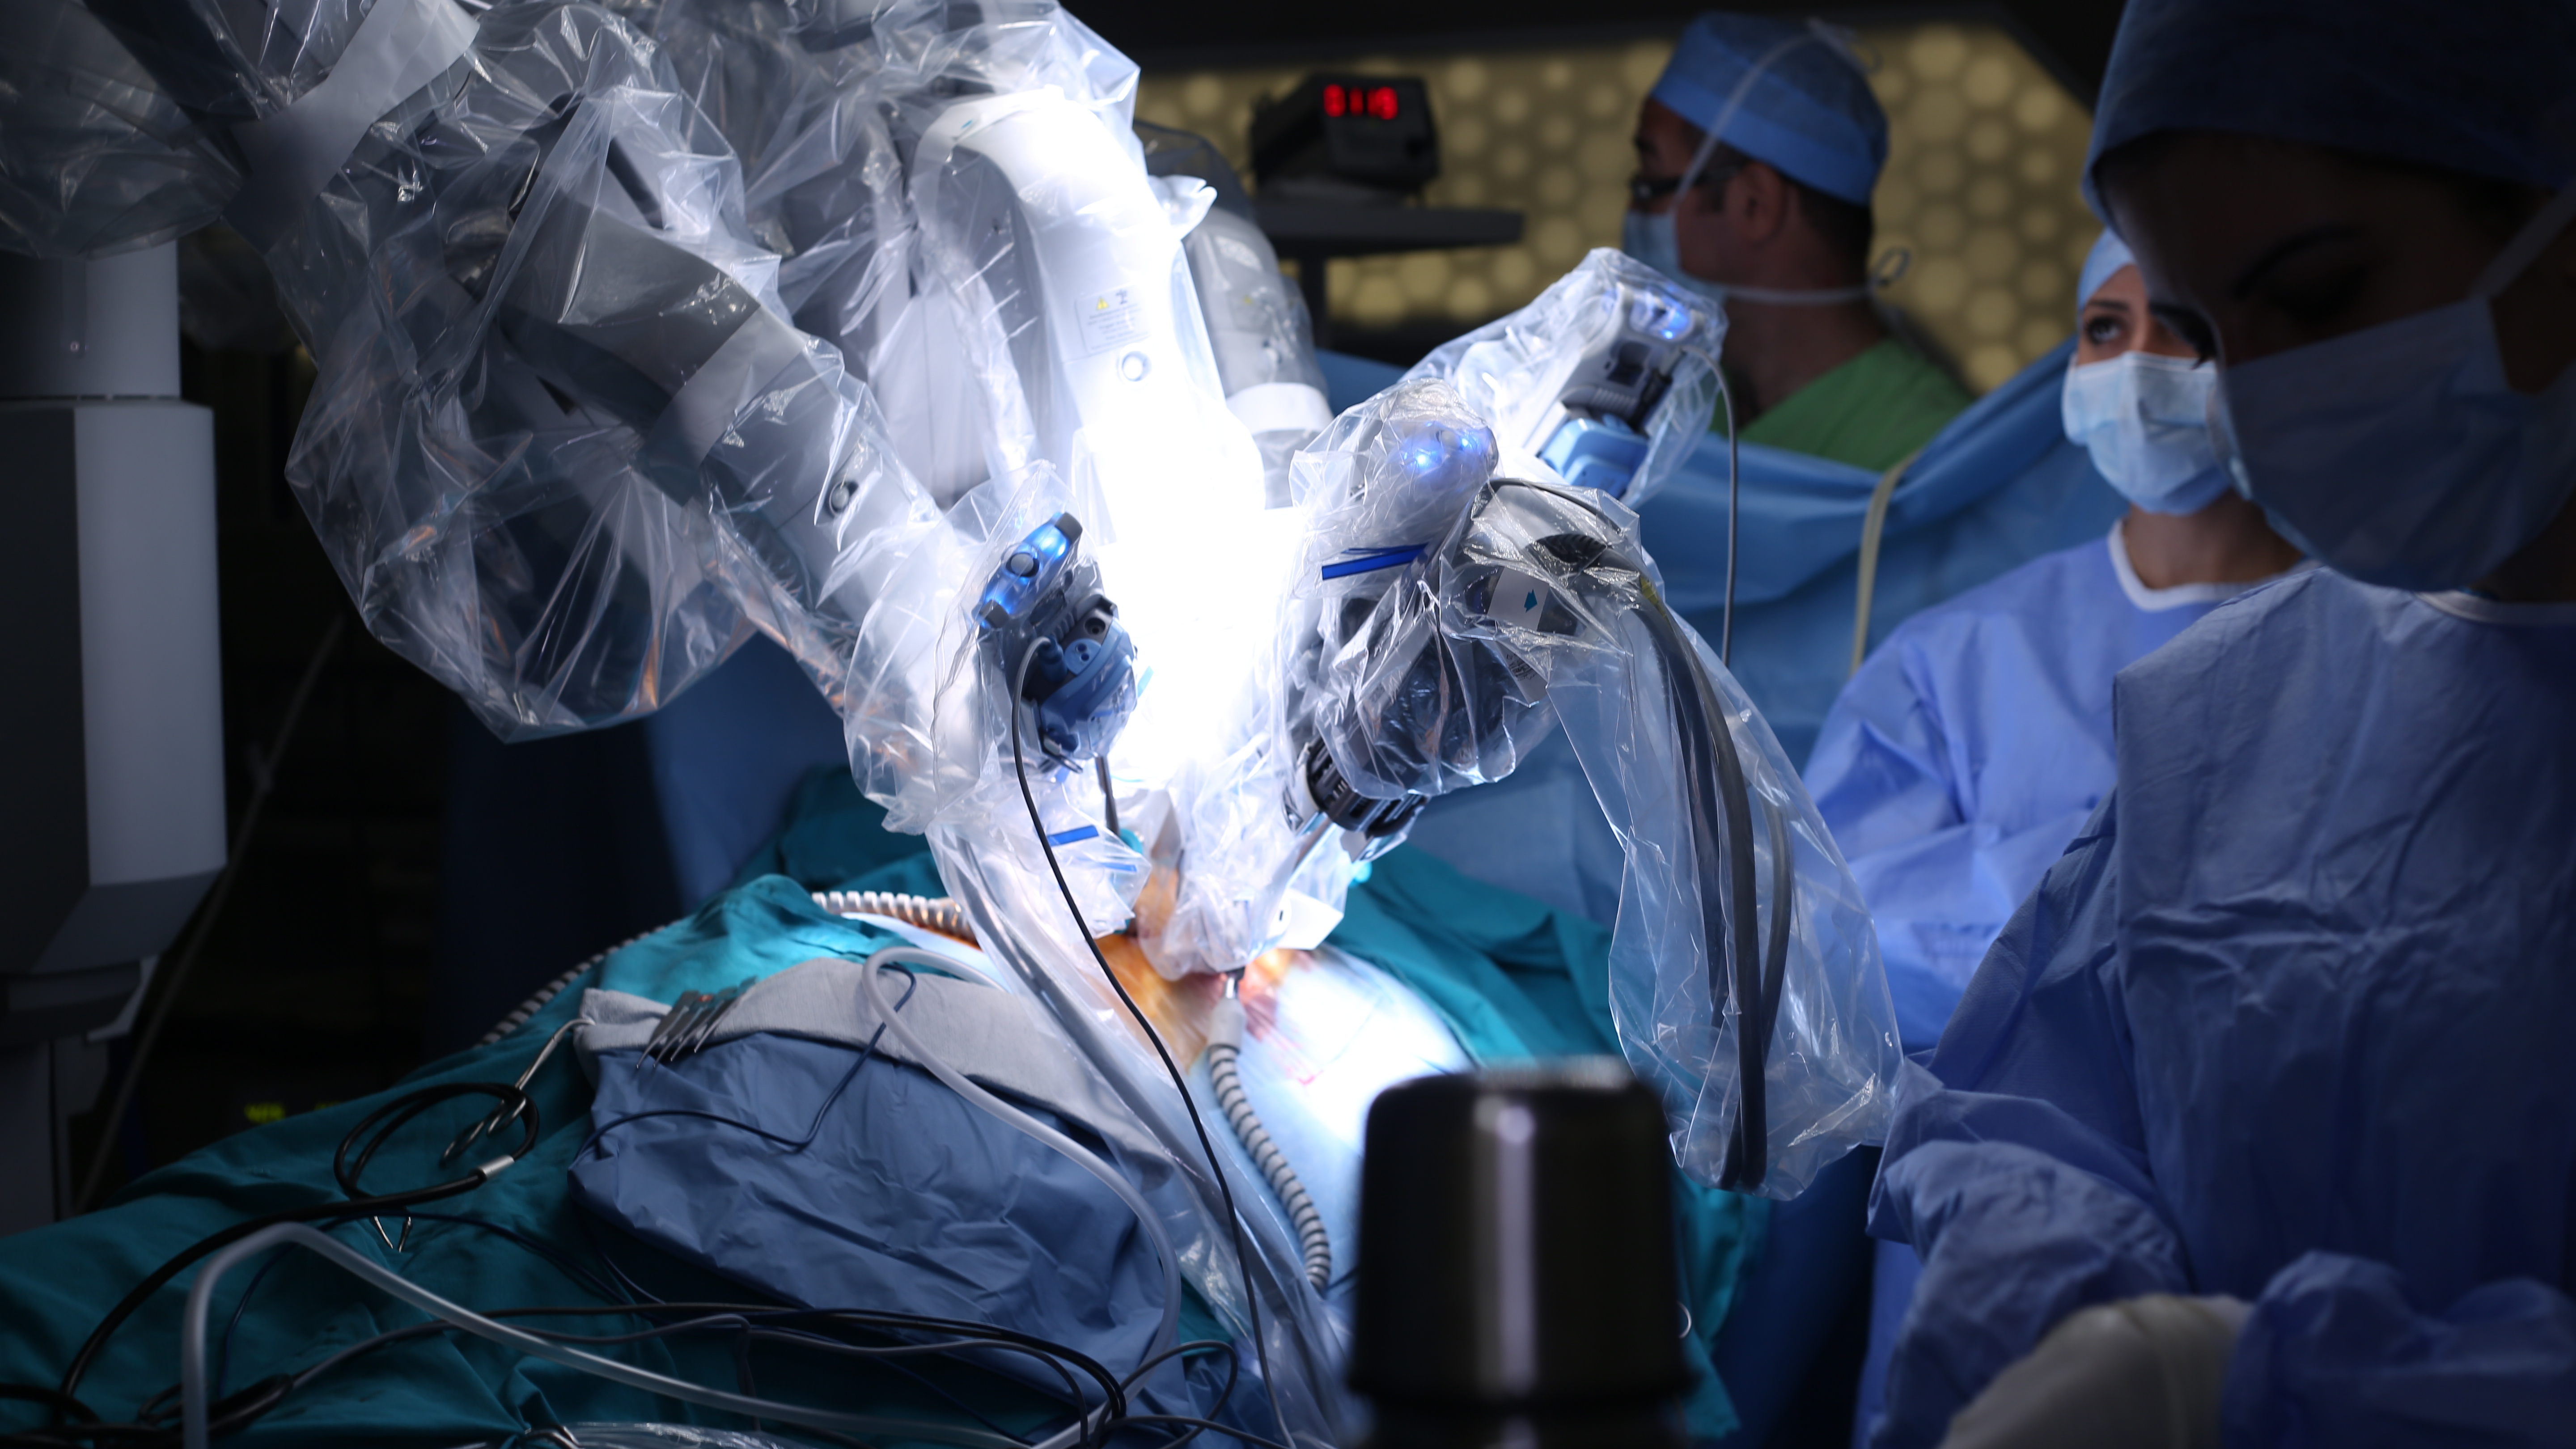 Da Vinci robot surgeon removes inoperable tumor, saving patient’s life